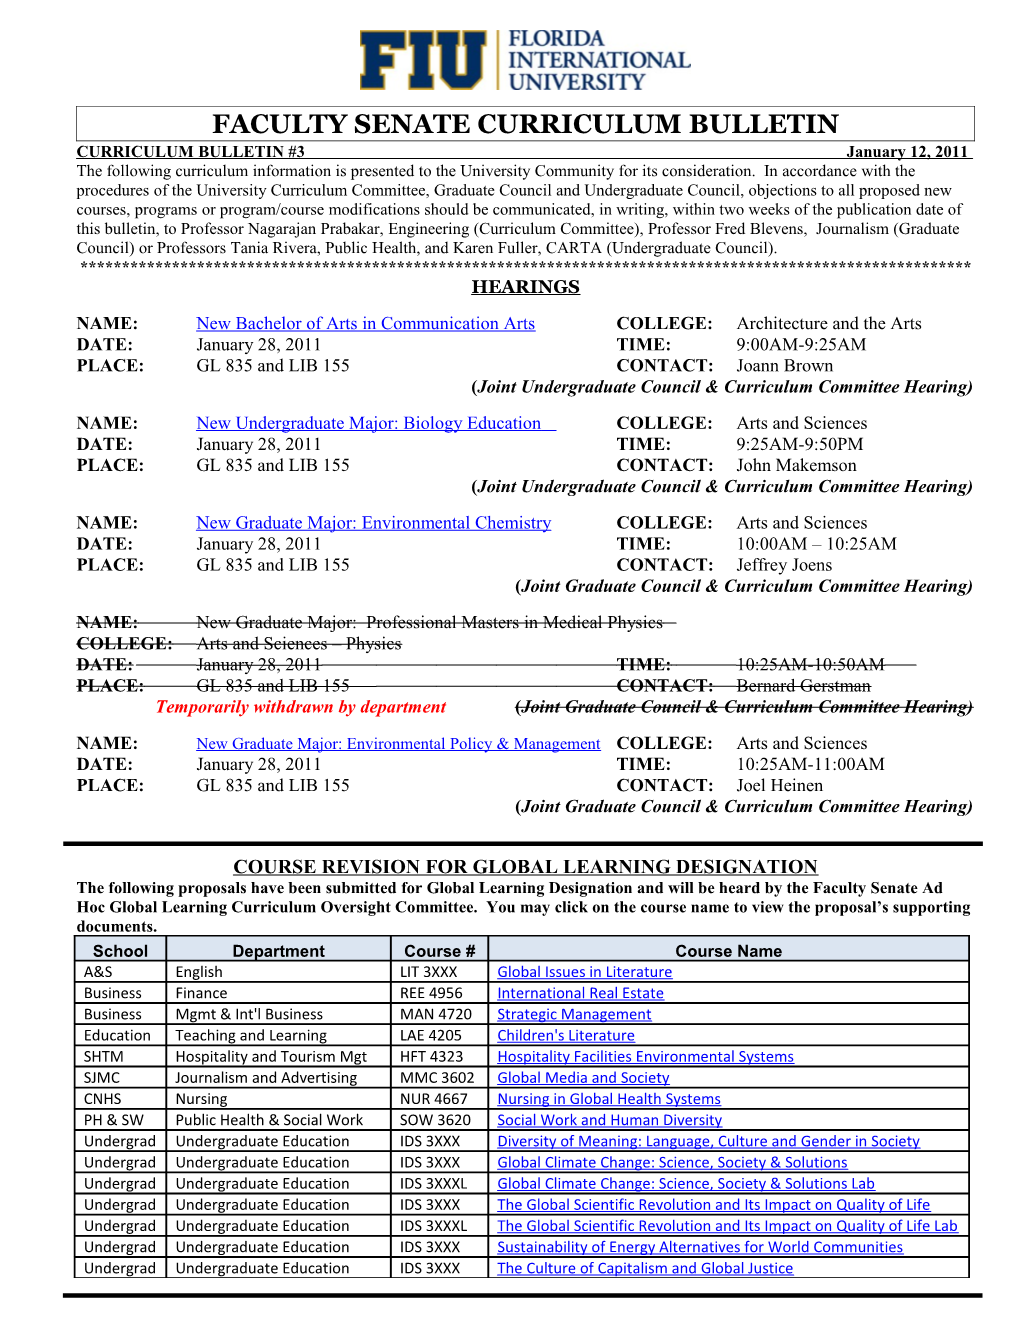 Faculty Senate Curriculum Bulletin s2